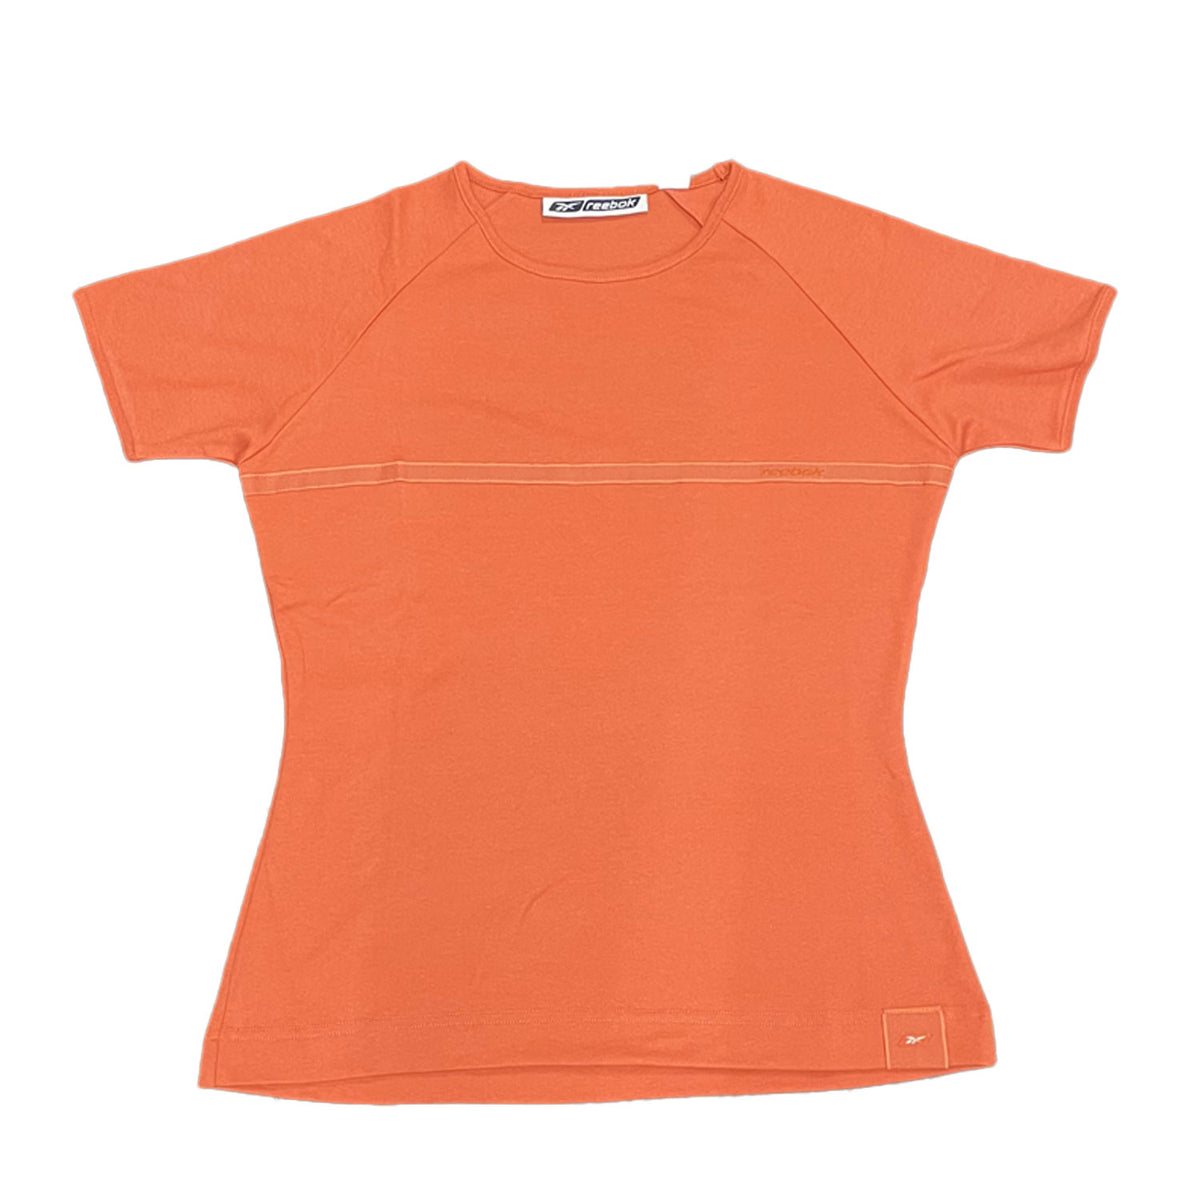 Reebok Womens Lined Classic T-Shirt - Orange - UK Size 12